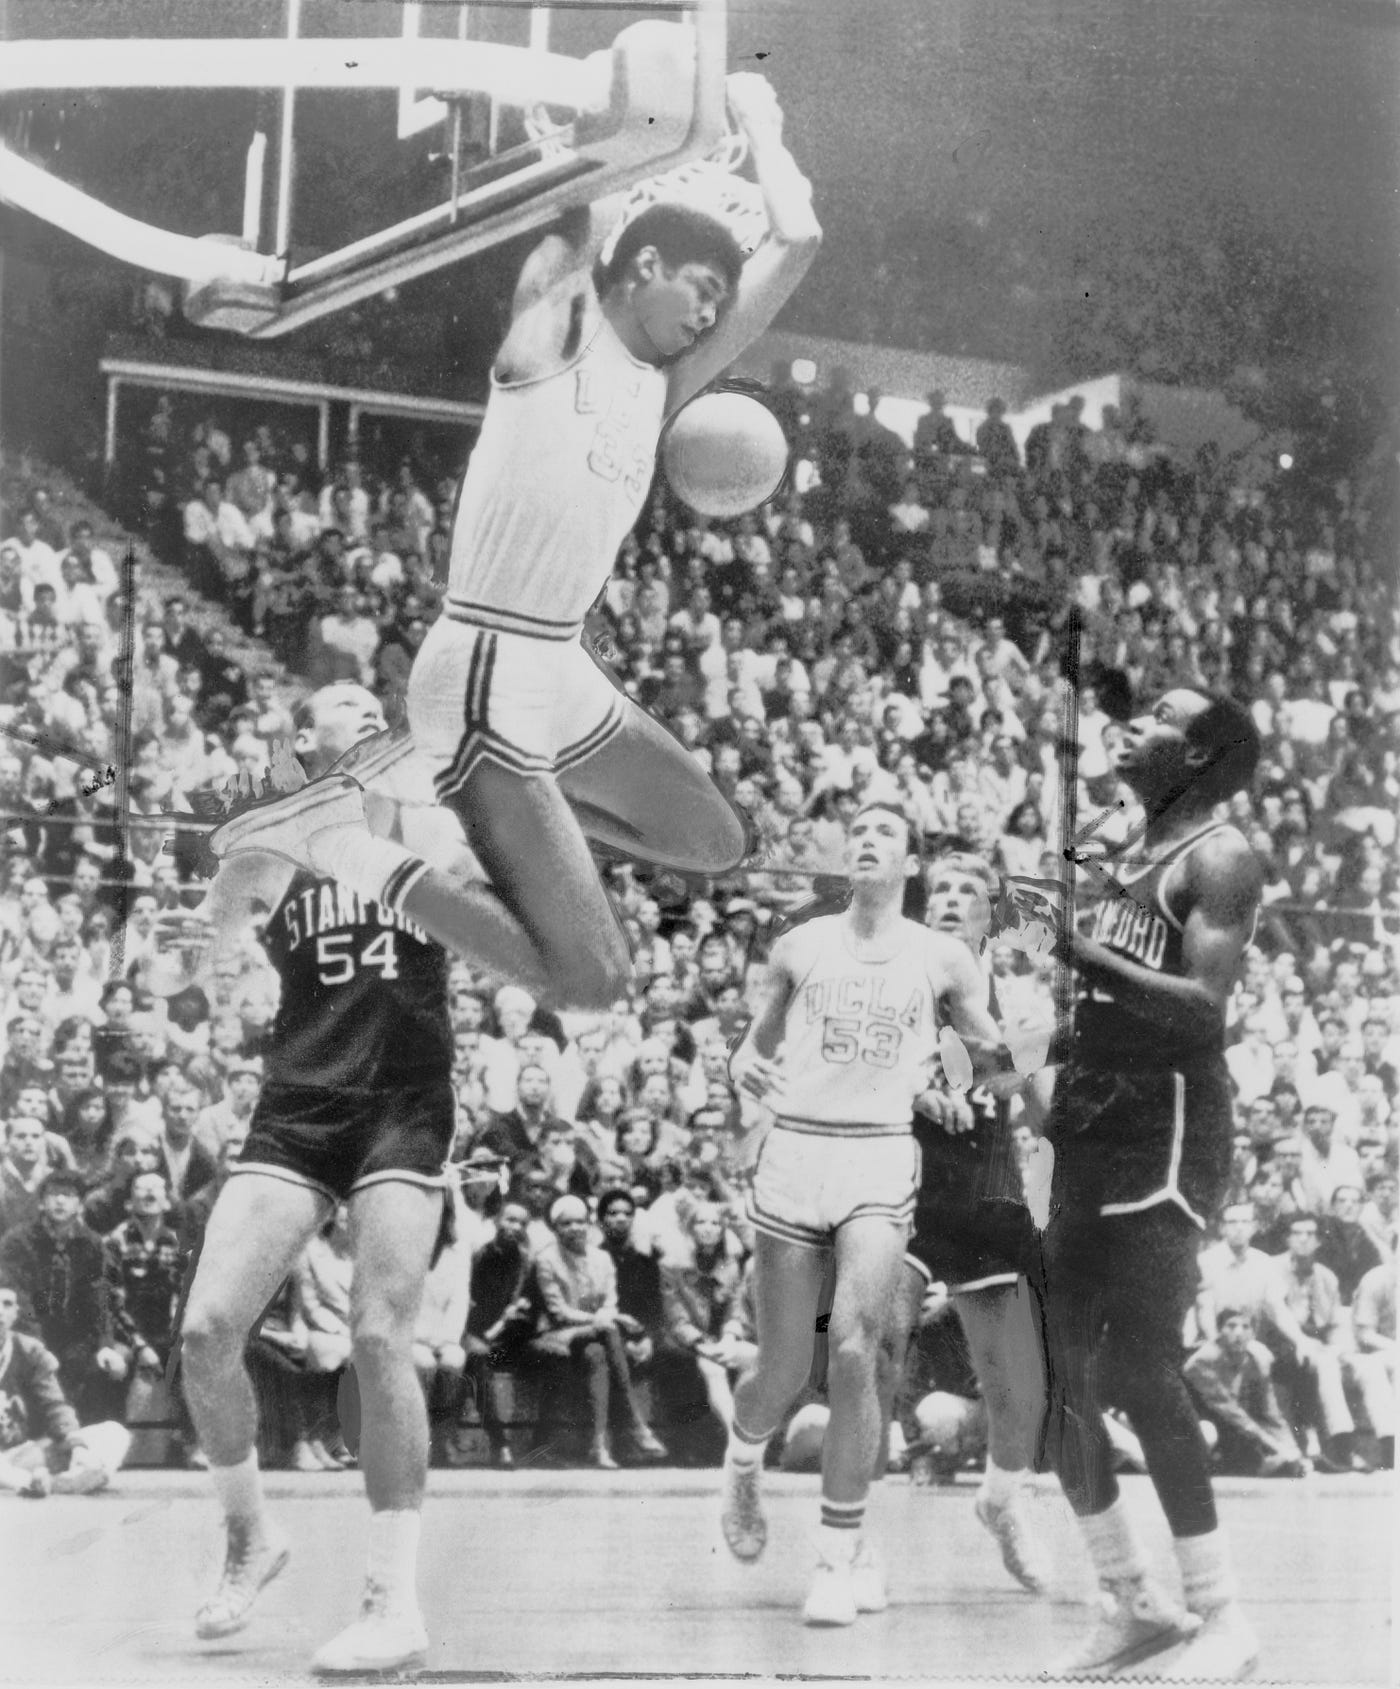 1967 Lew Alcindor Signed UCLA Basketball Program. The career